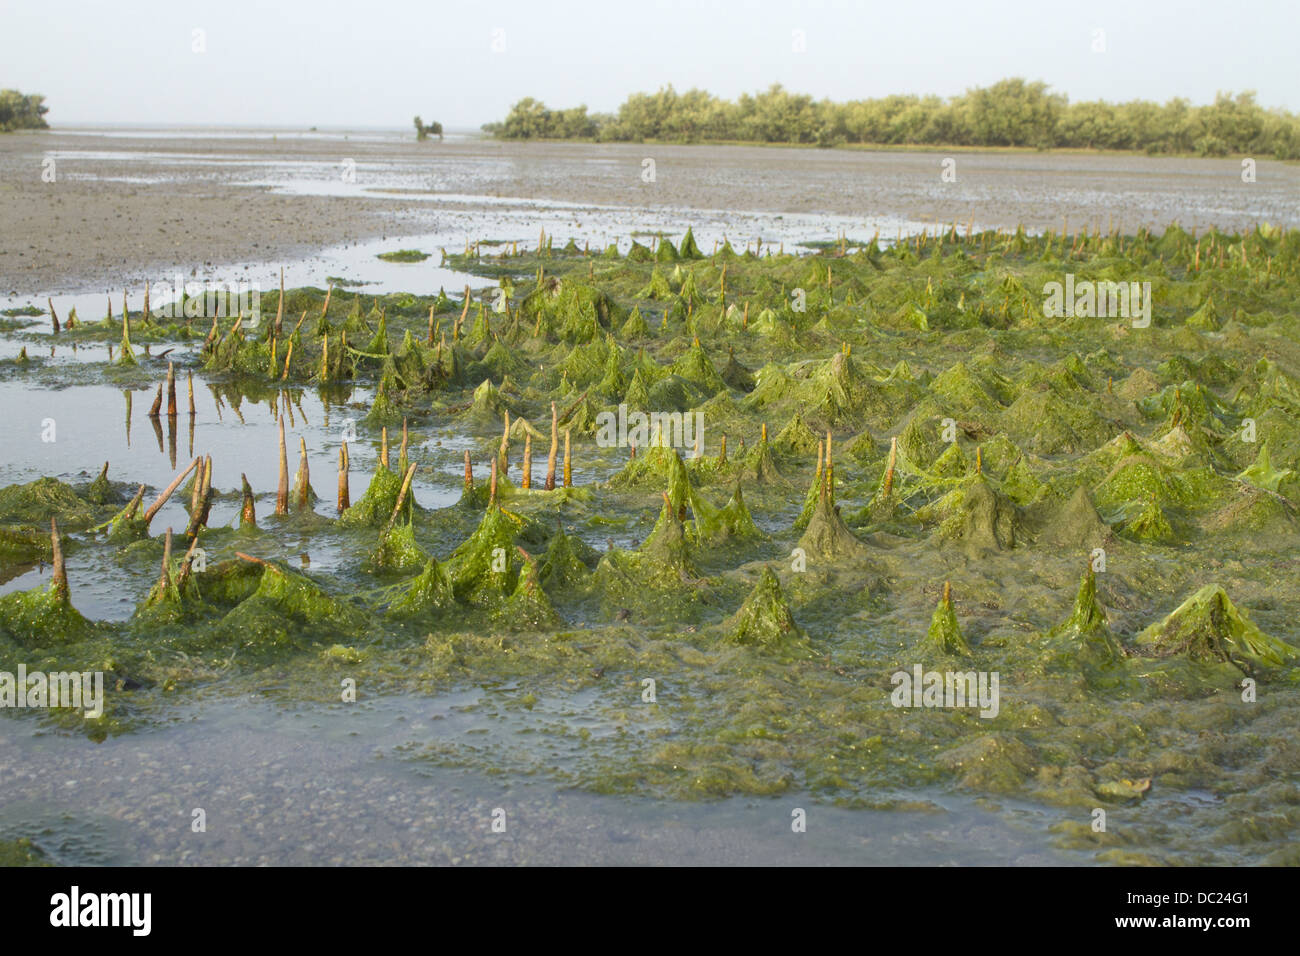 Algae formation, Marine national park, Jamnagar, Gujarat Stock Photo